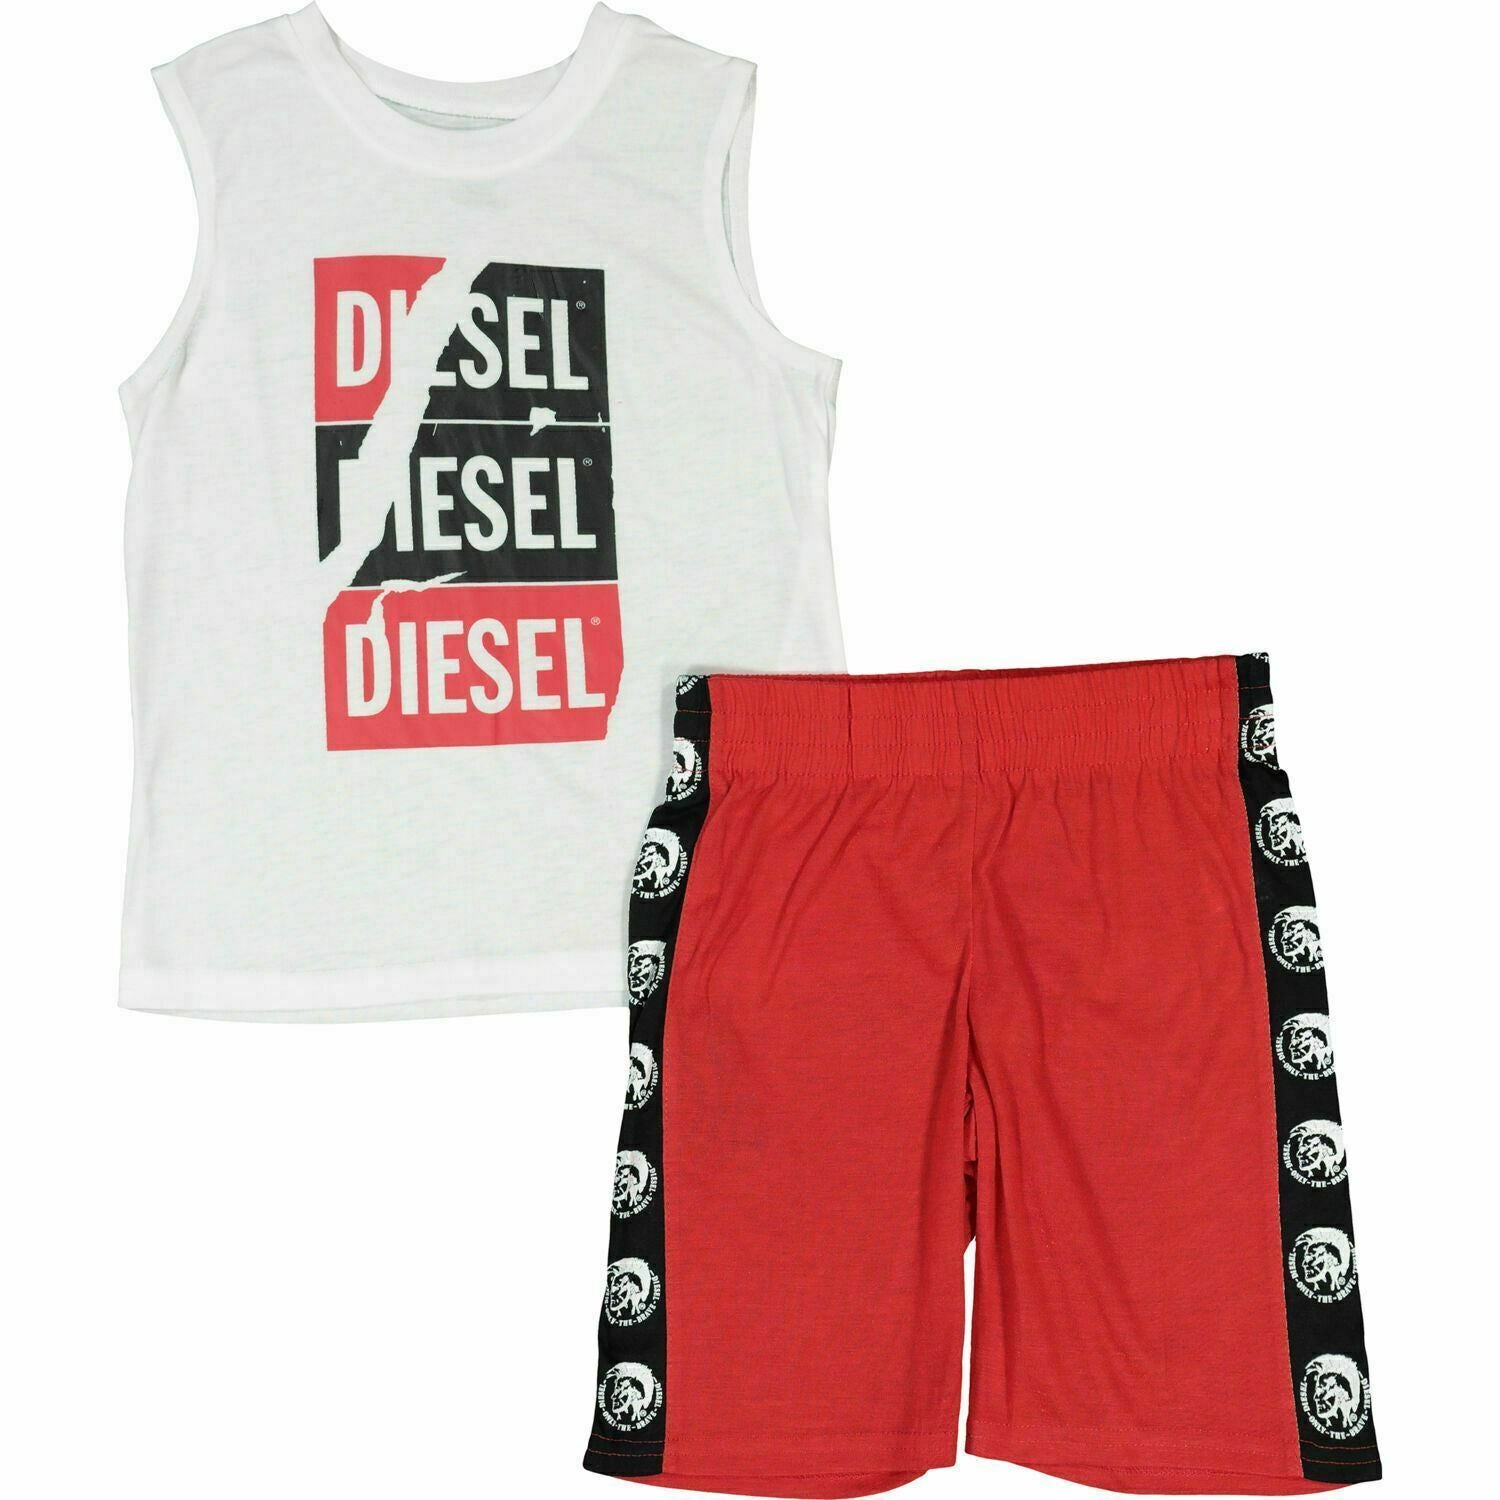 DIESEL Boys Kids 2-pc Pyjama Set Vest Tank Top & Shorts White & Red size 5 years